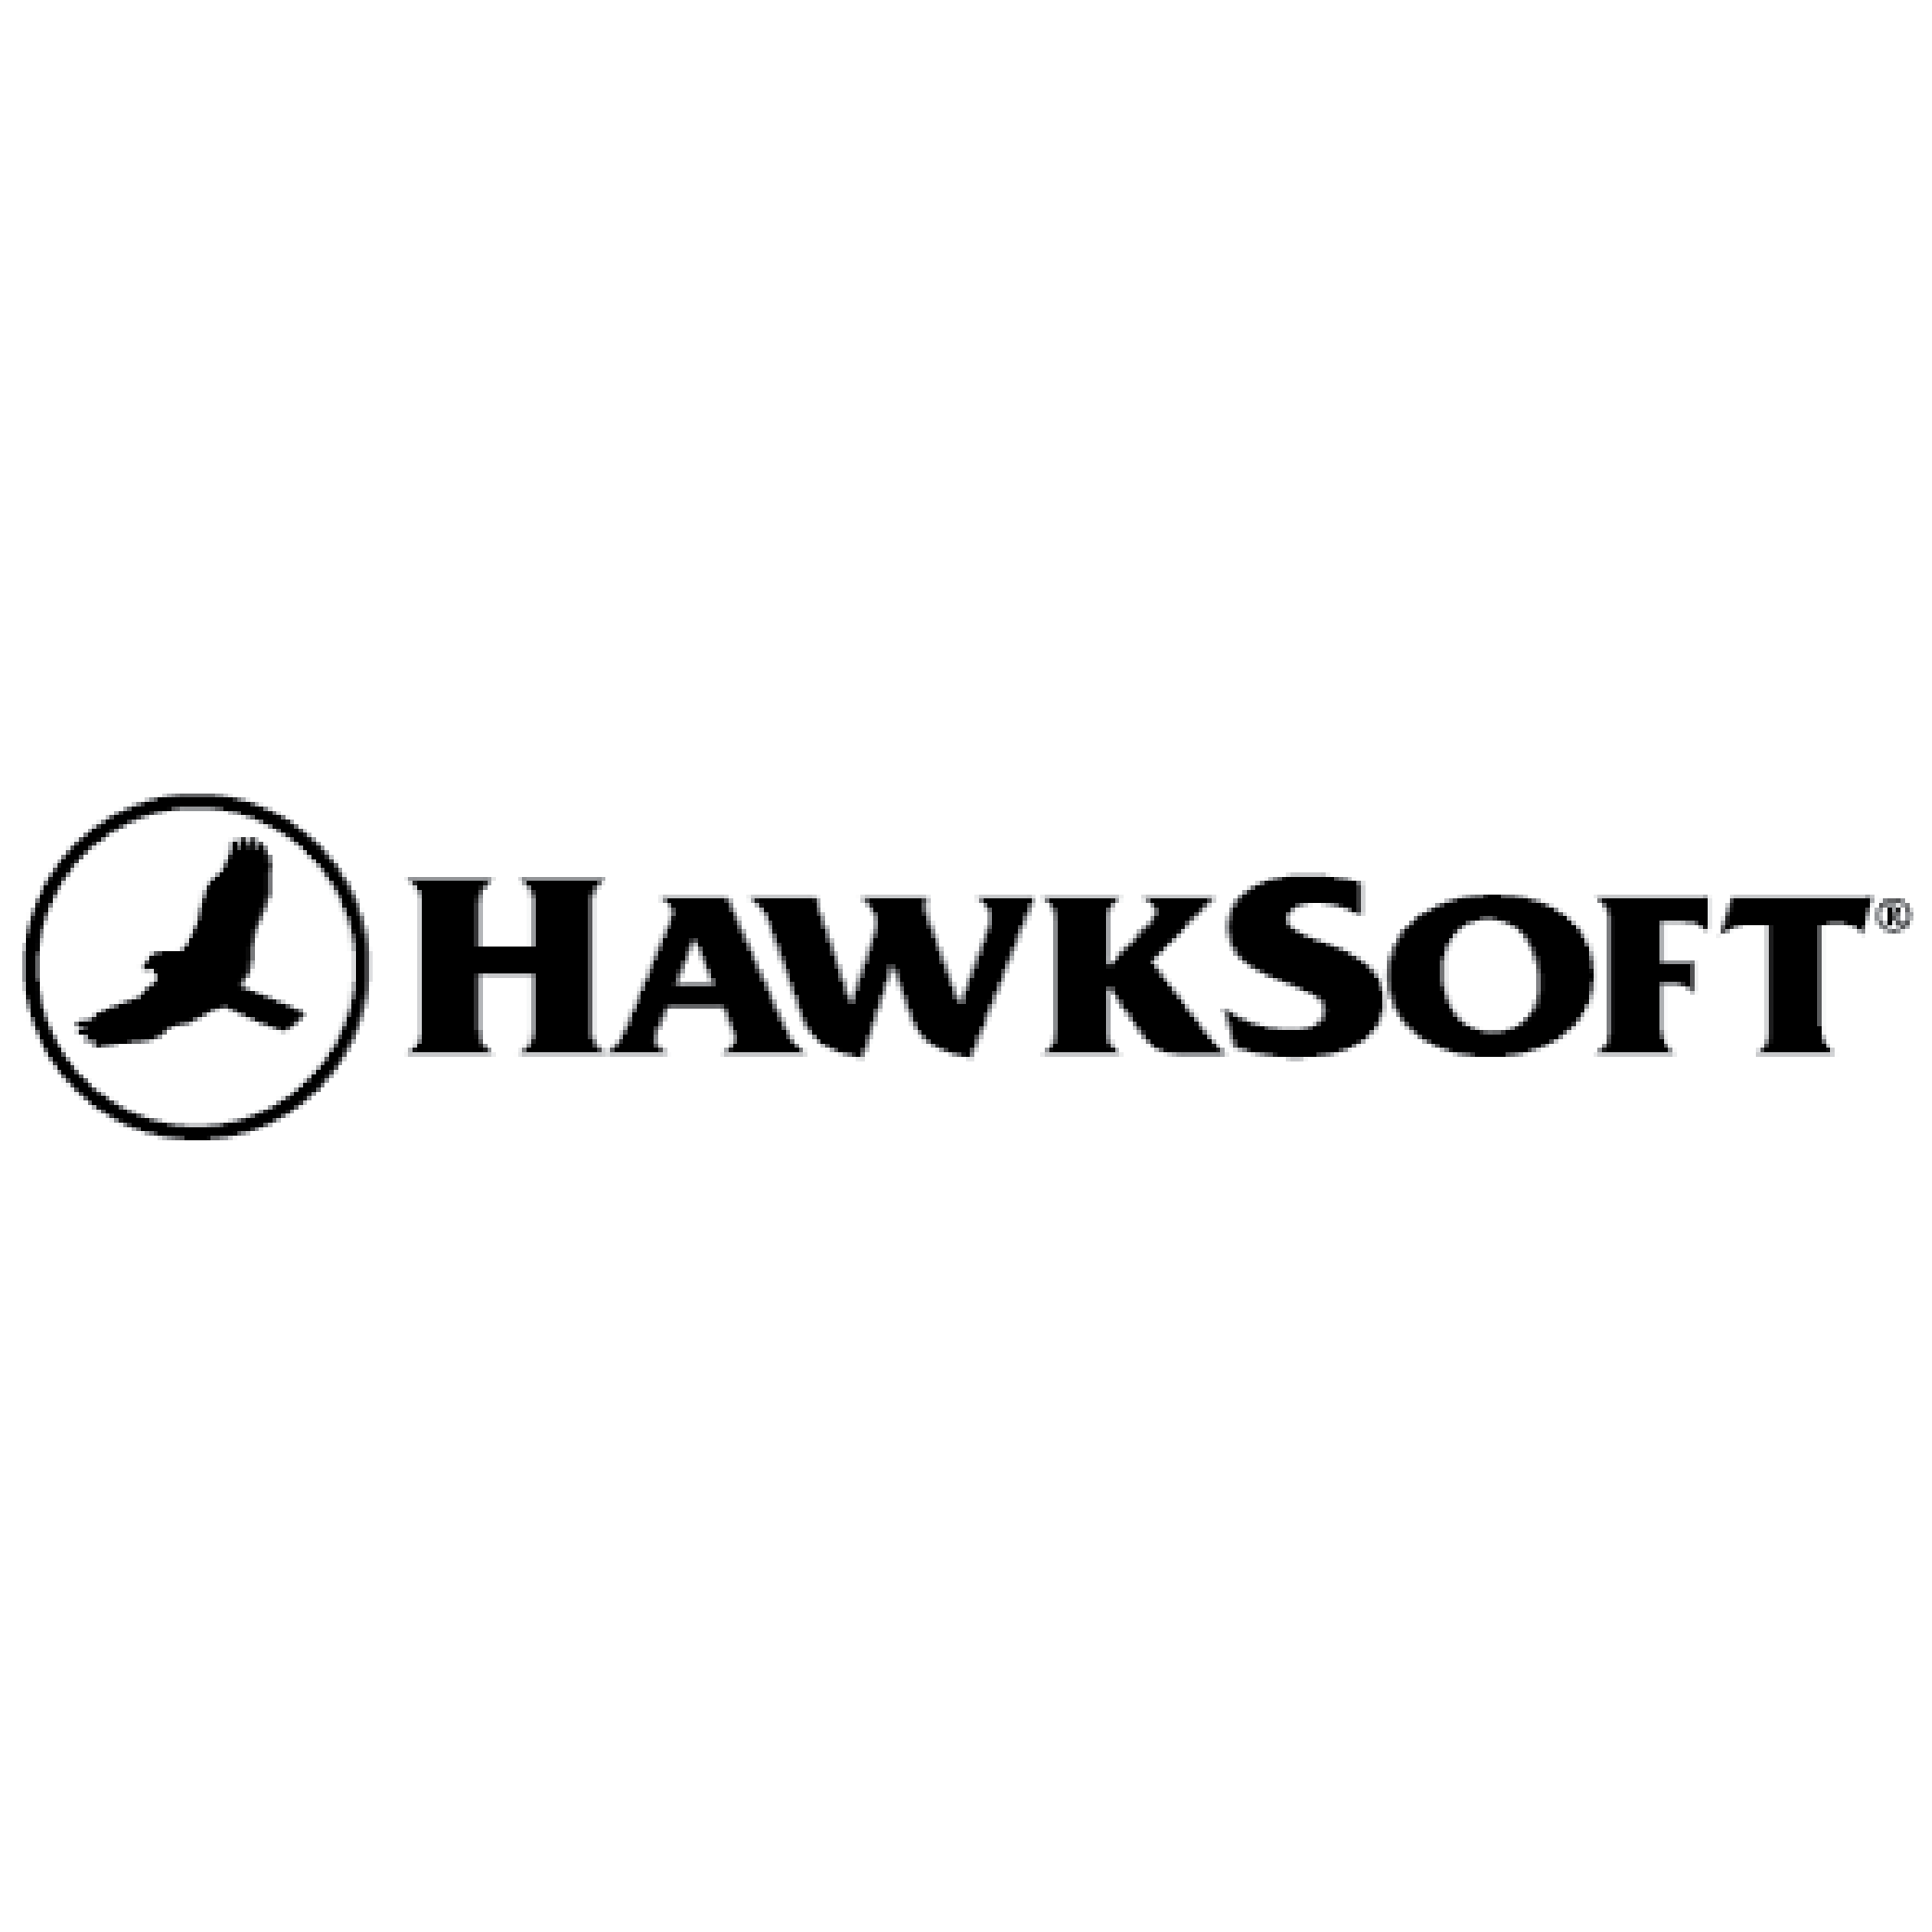 Hawksoft Logo